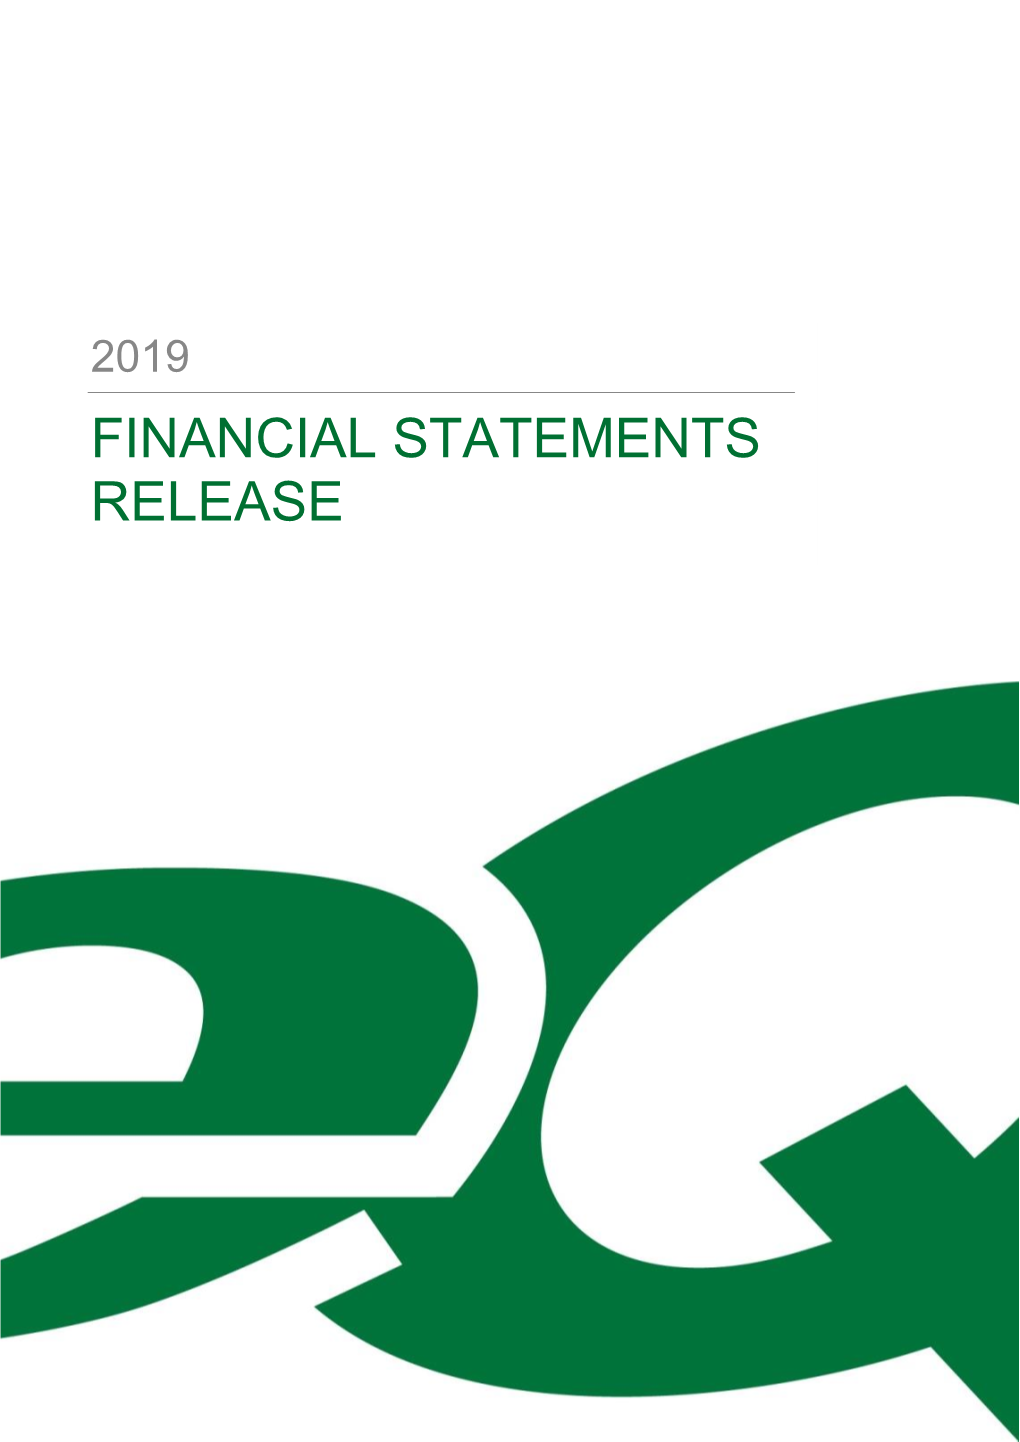 Eq Plc Financial Statements Release 2019